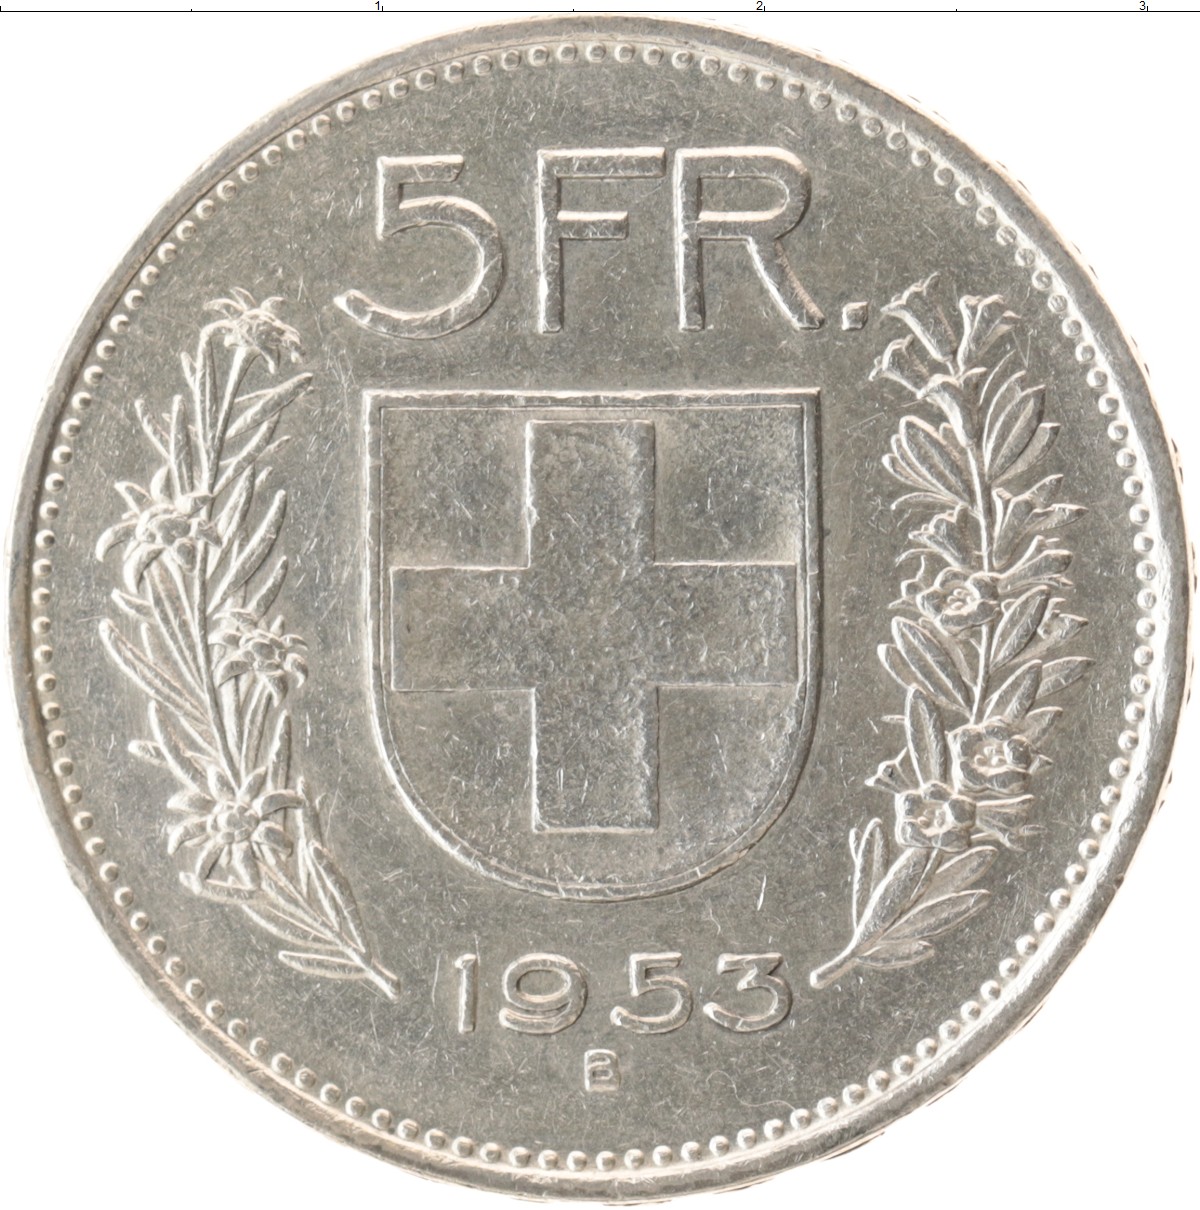 Confoederatio helvetica. Монета Конфедерация Гельветика 5 франков. Швейцария Франк монета. Confoederatio helvetica 5fr 1976. Монеты Швейцарии 1996г.